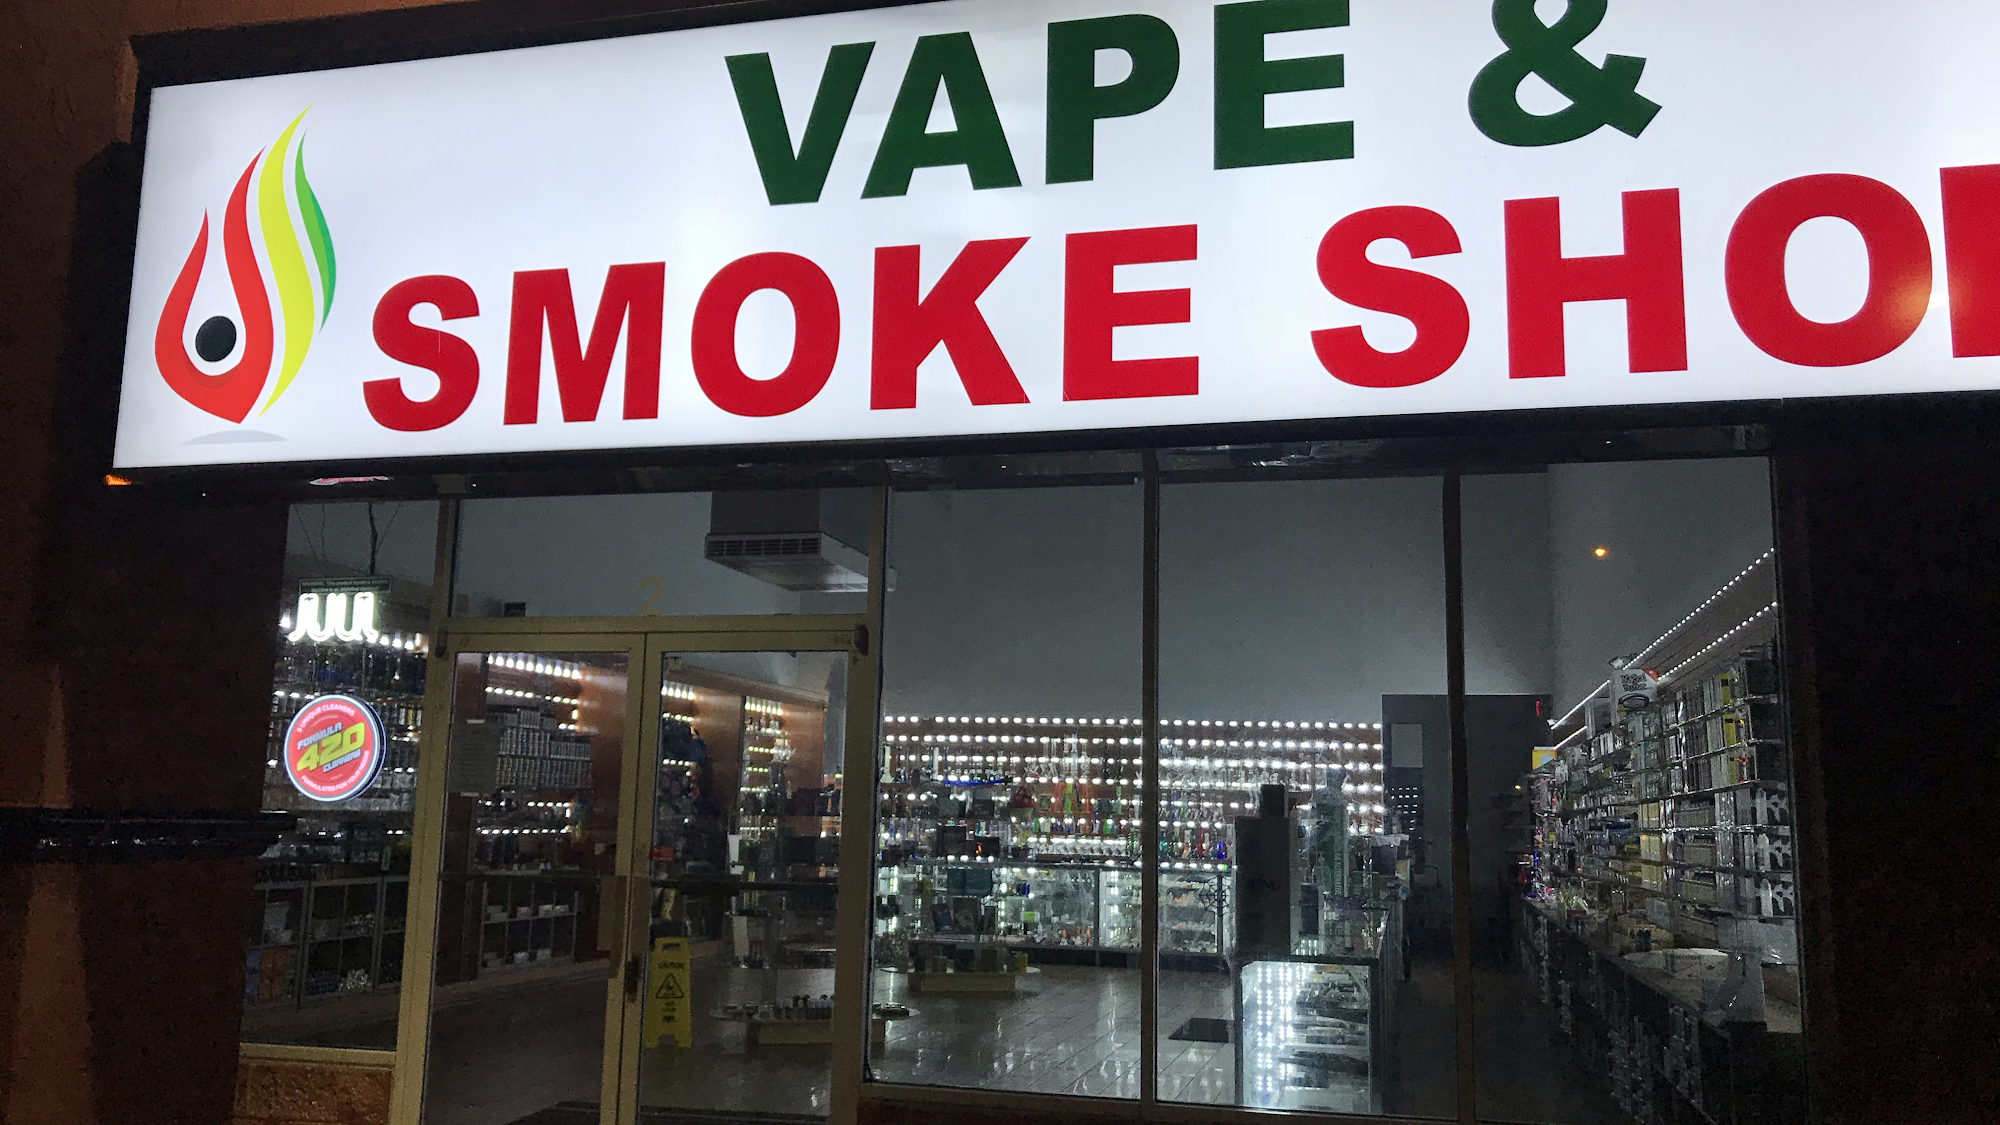 Vape & Smoke Shop - Doral